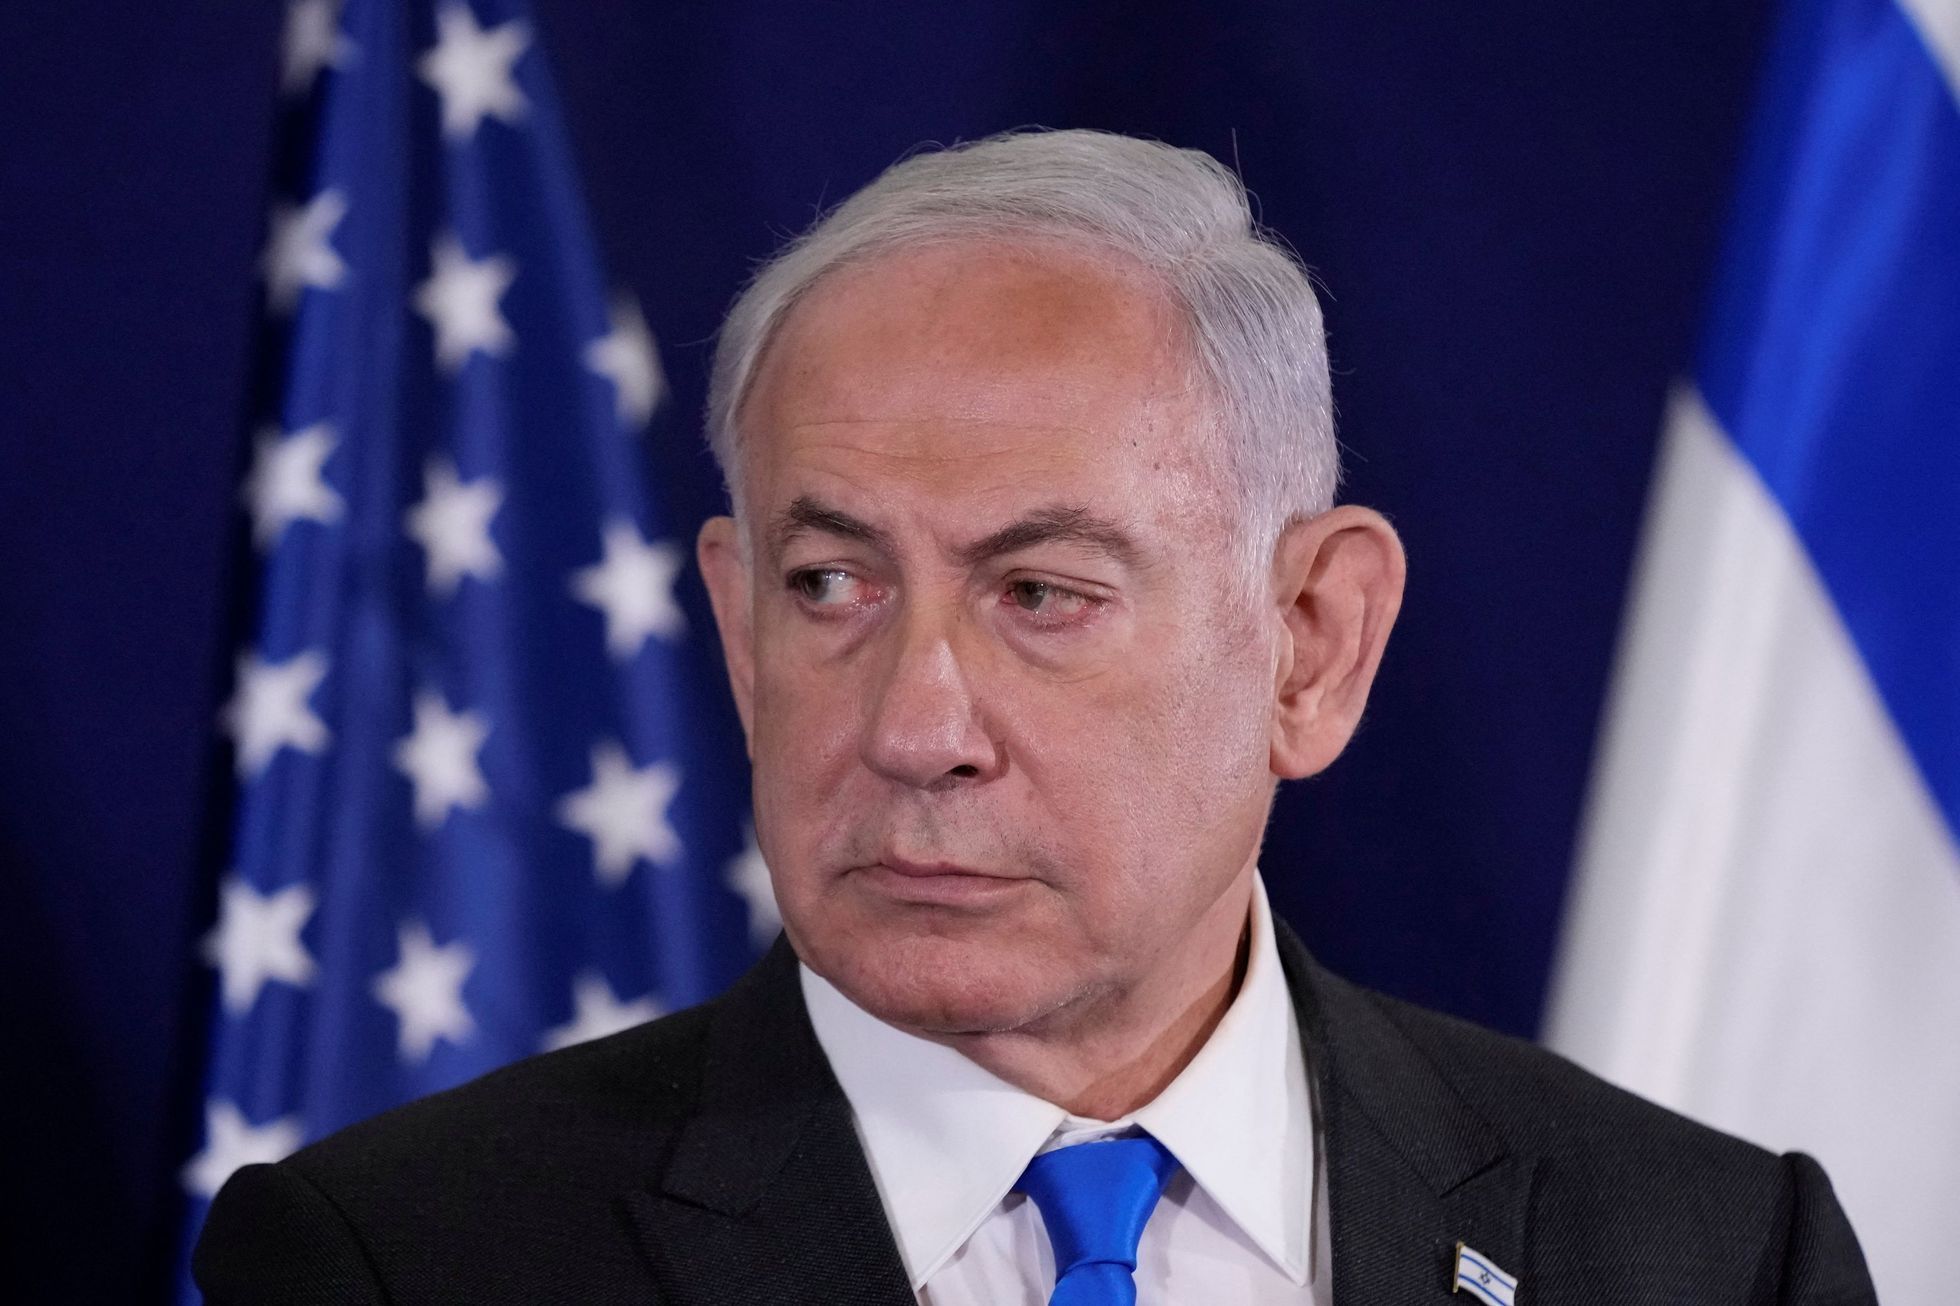 Izraelský premiér Benjamin Netanjahu